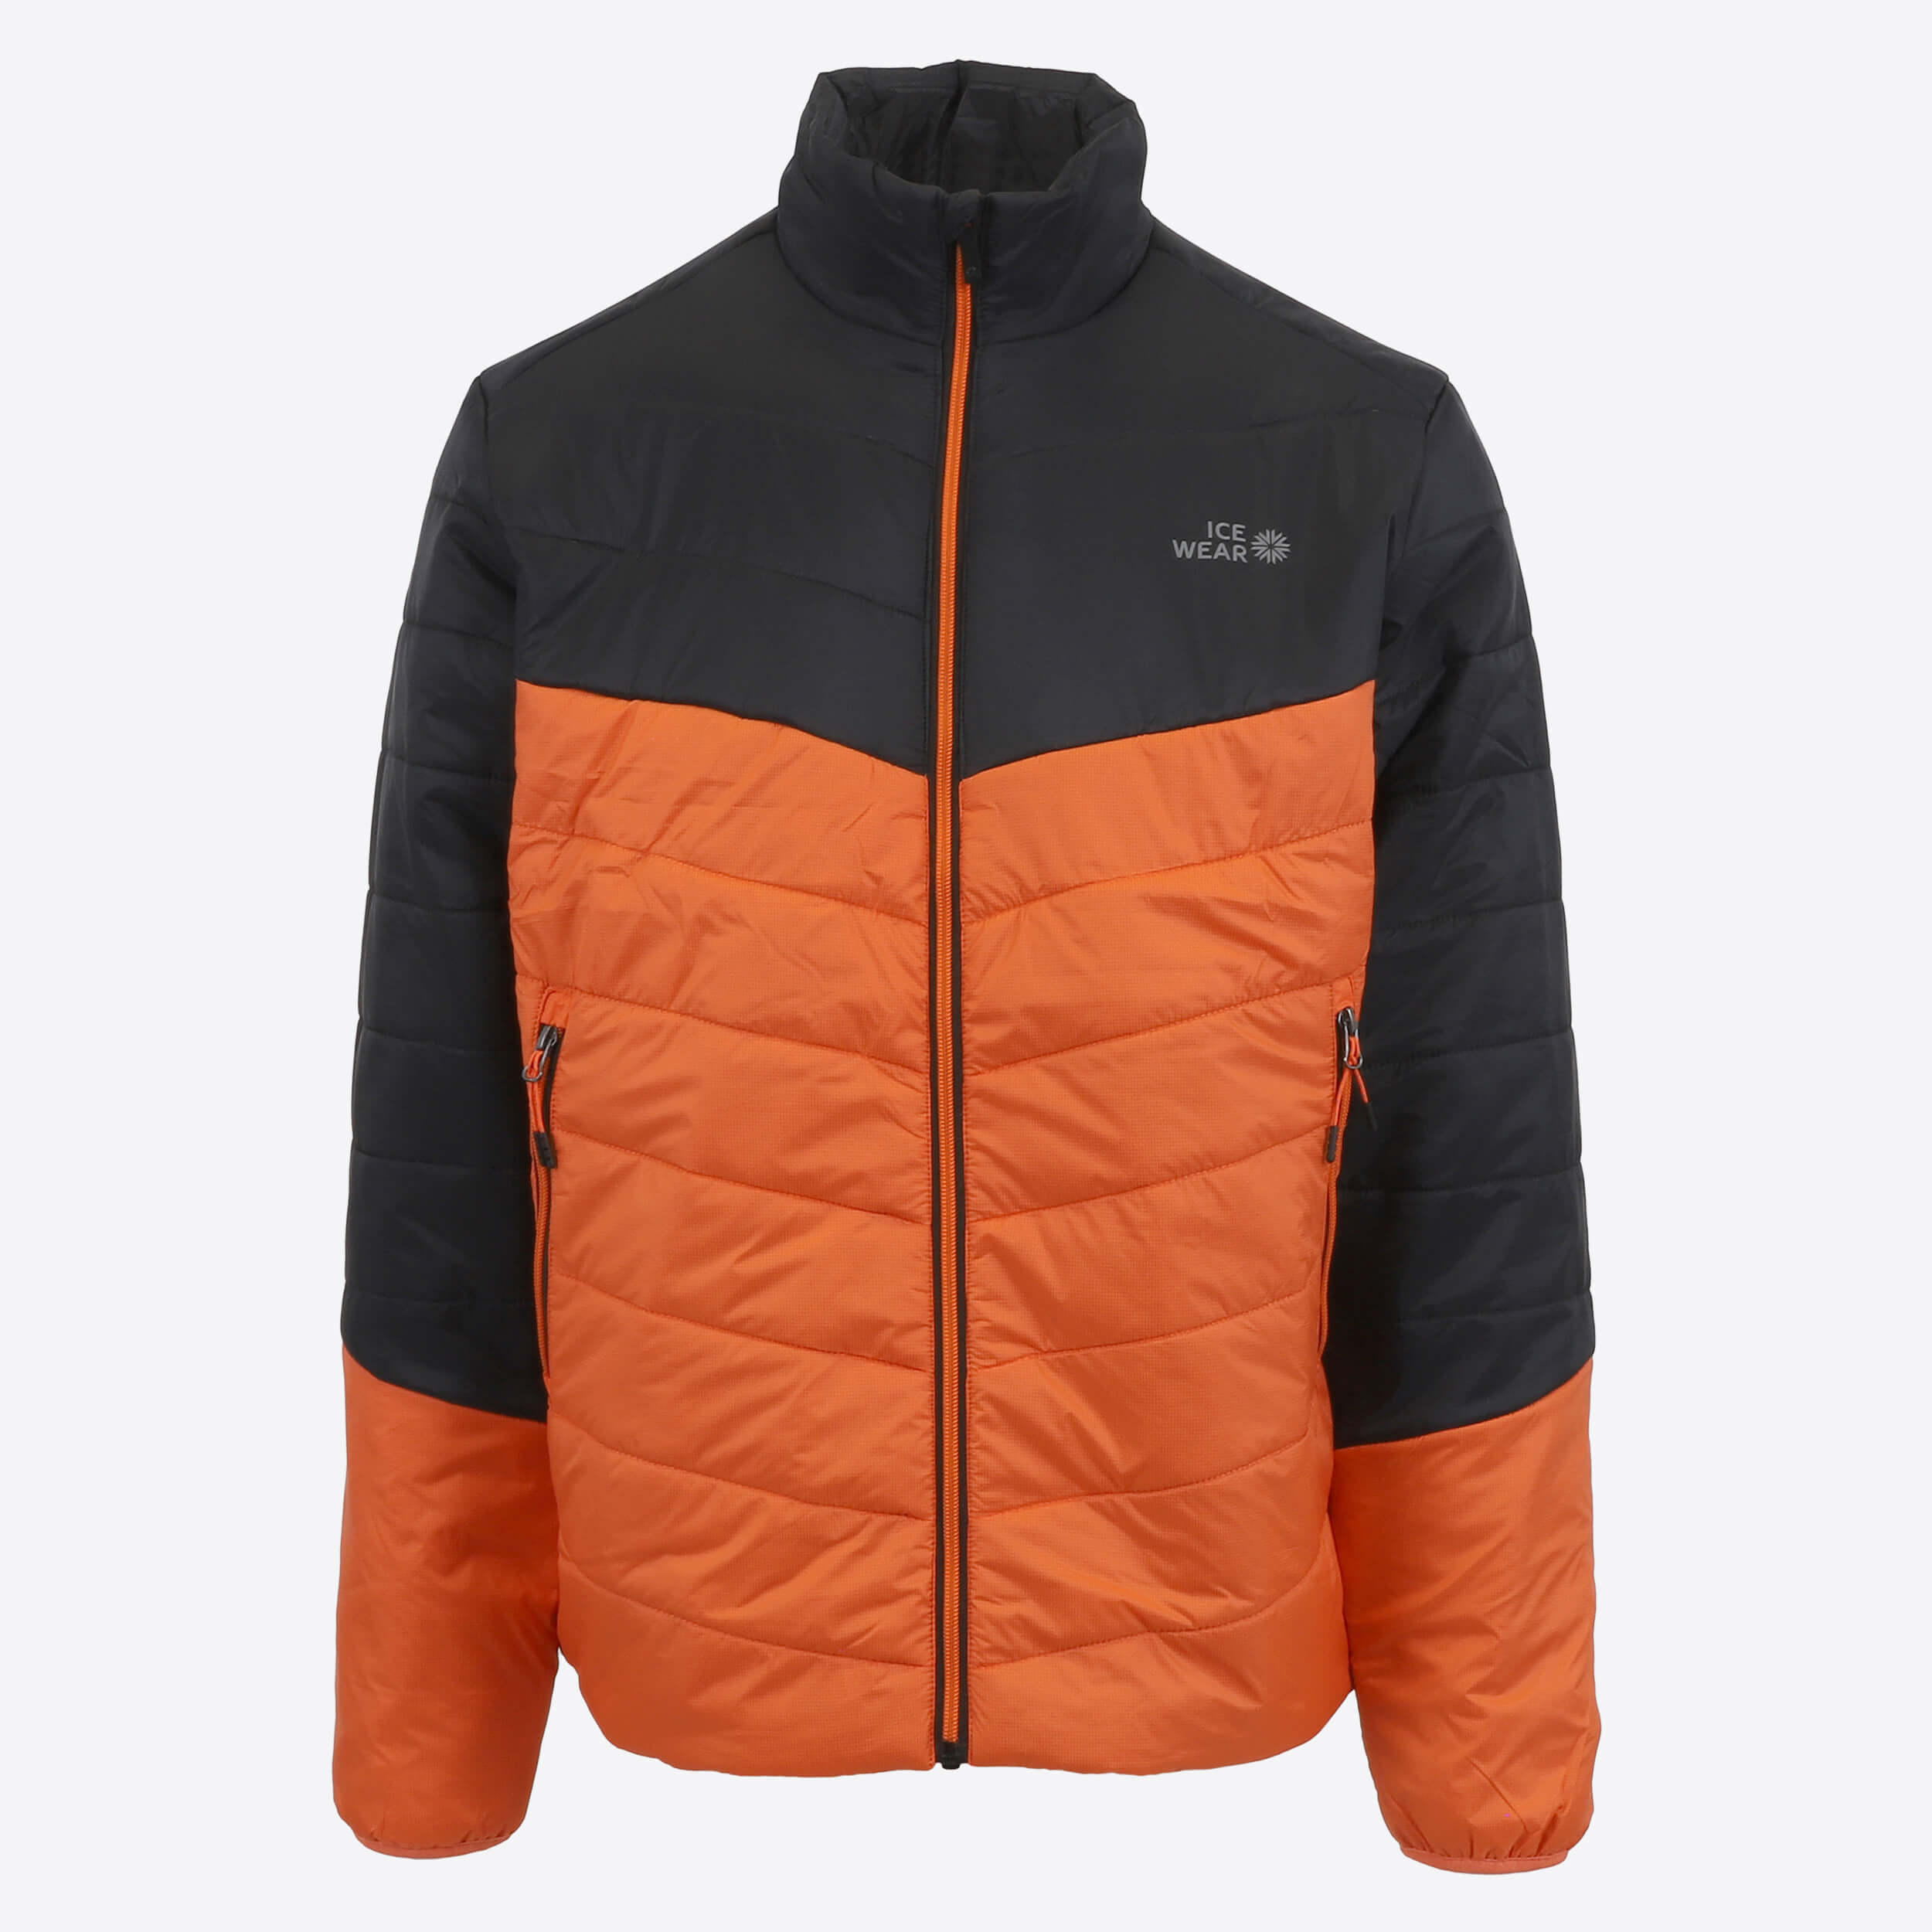 Geysir insulated wool jacket